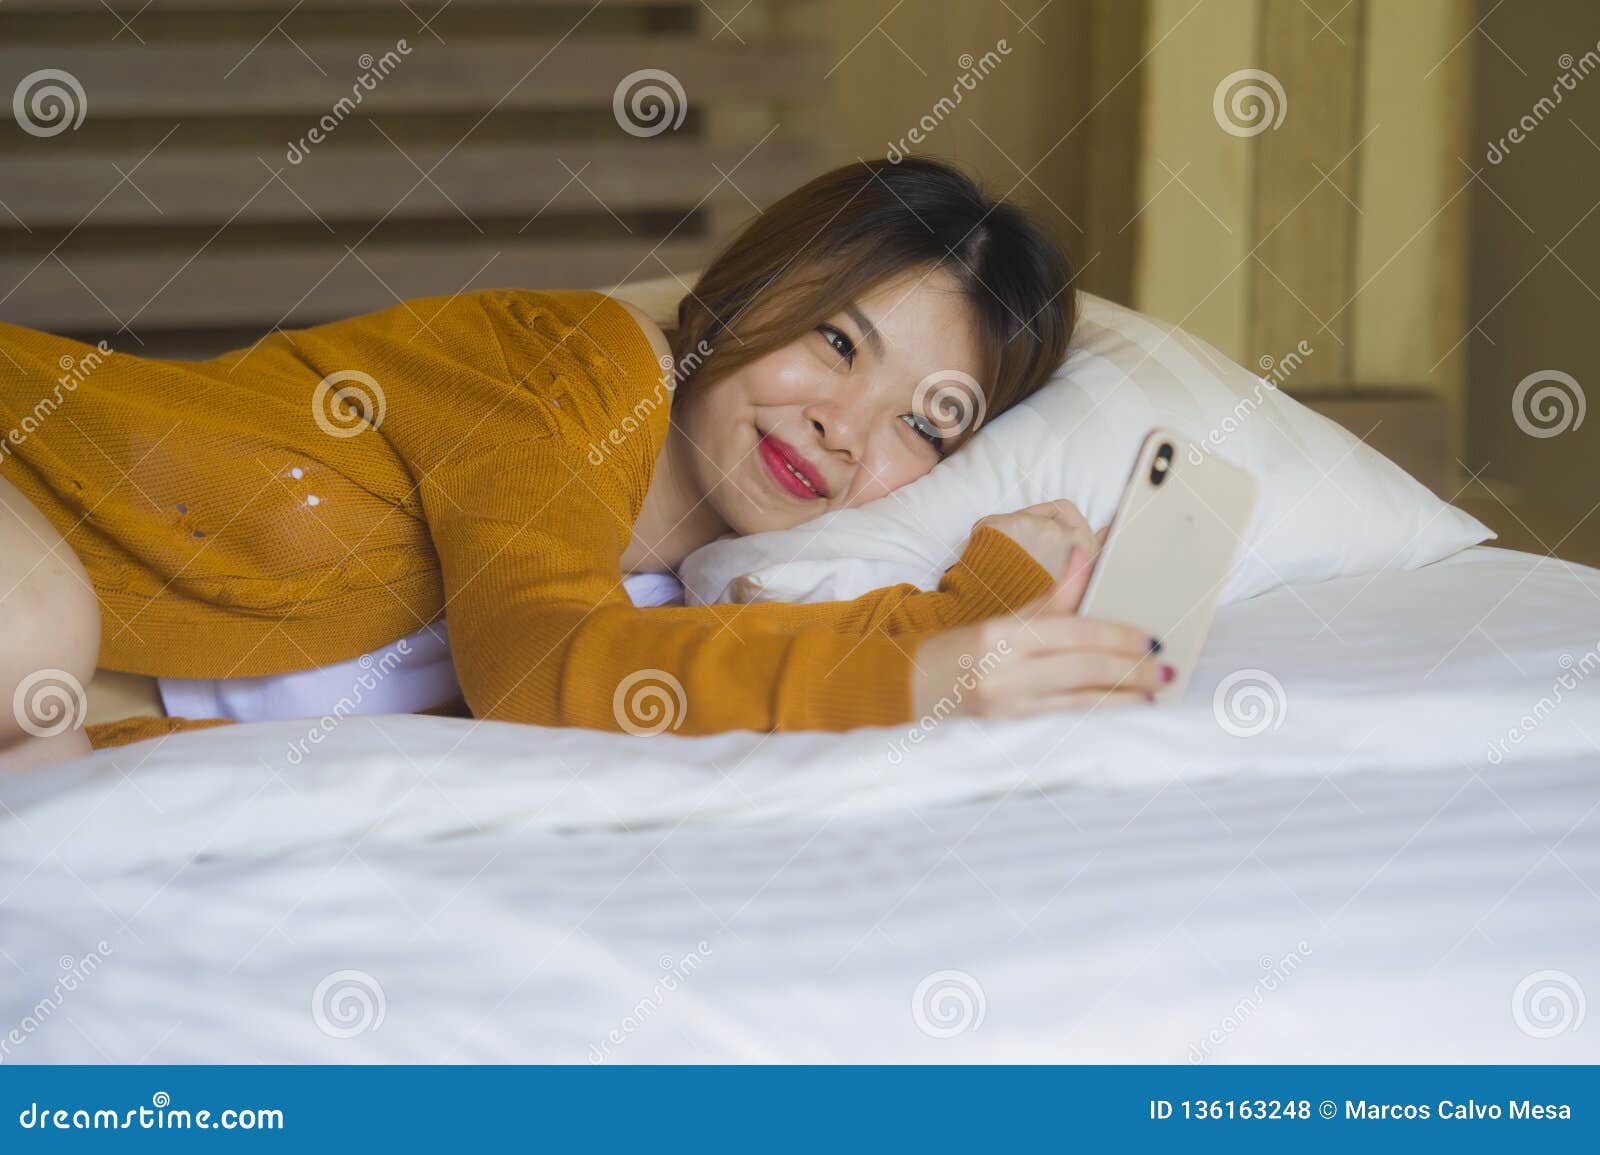 dating app picture in bedroom